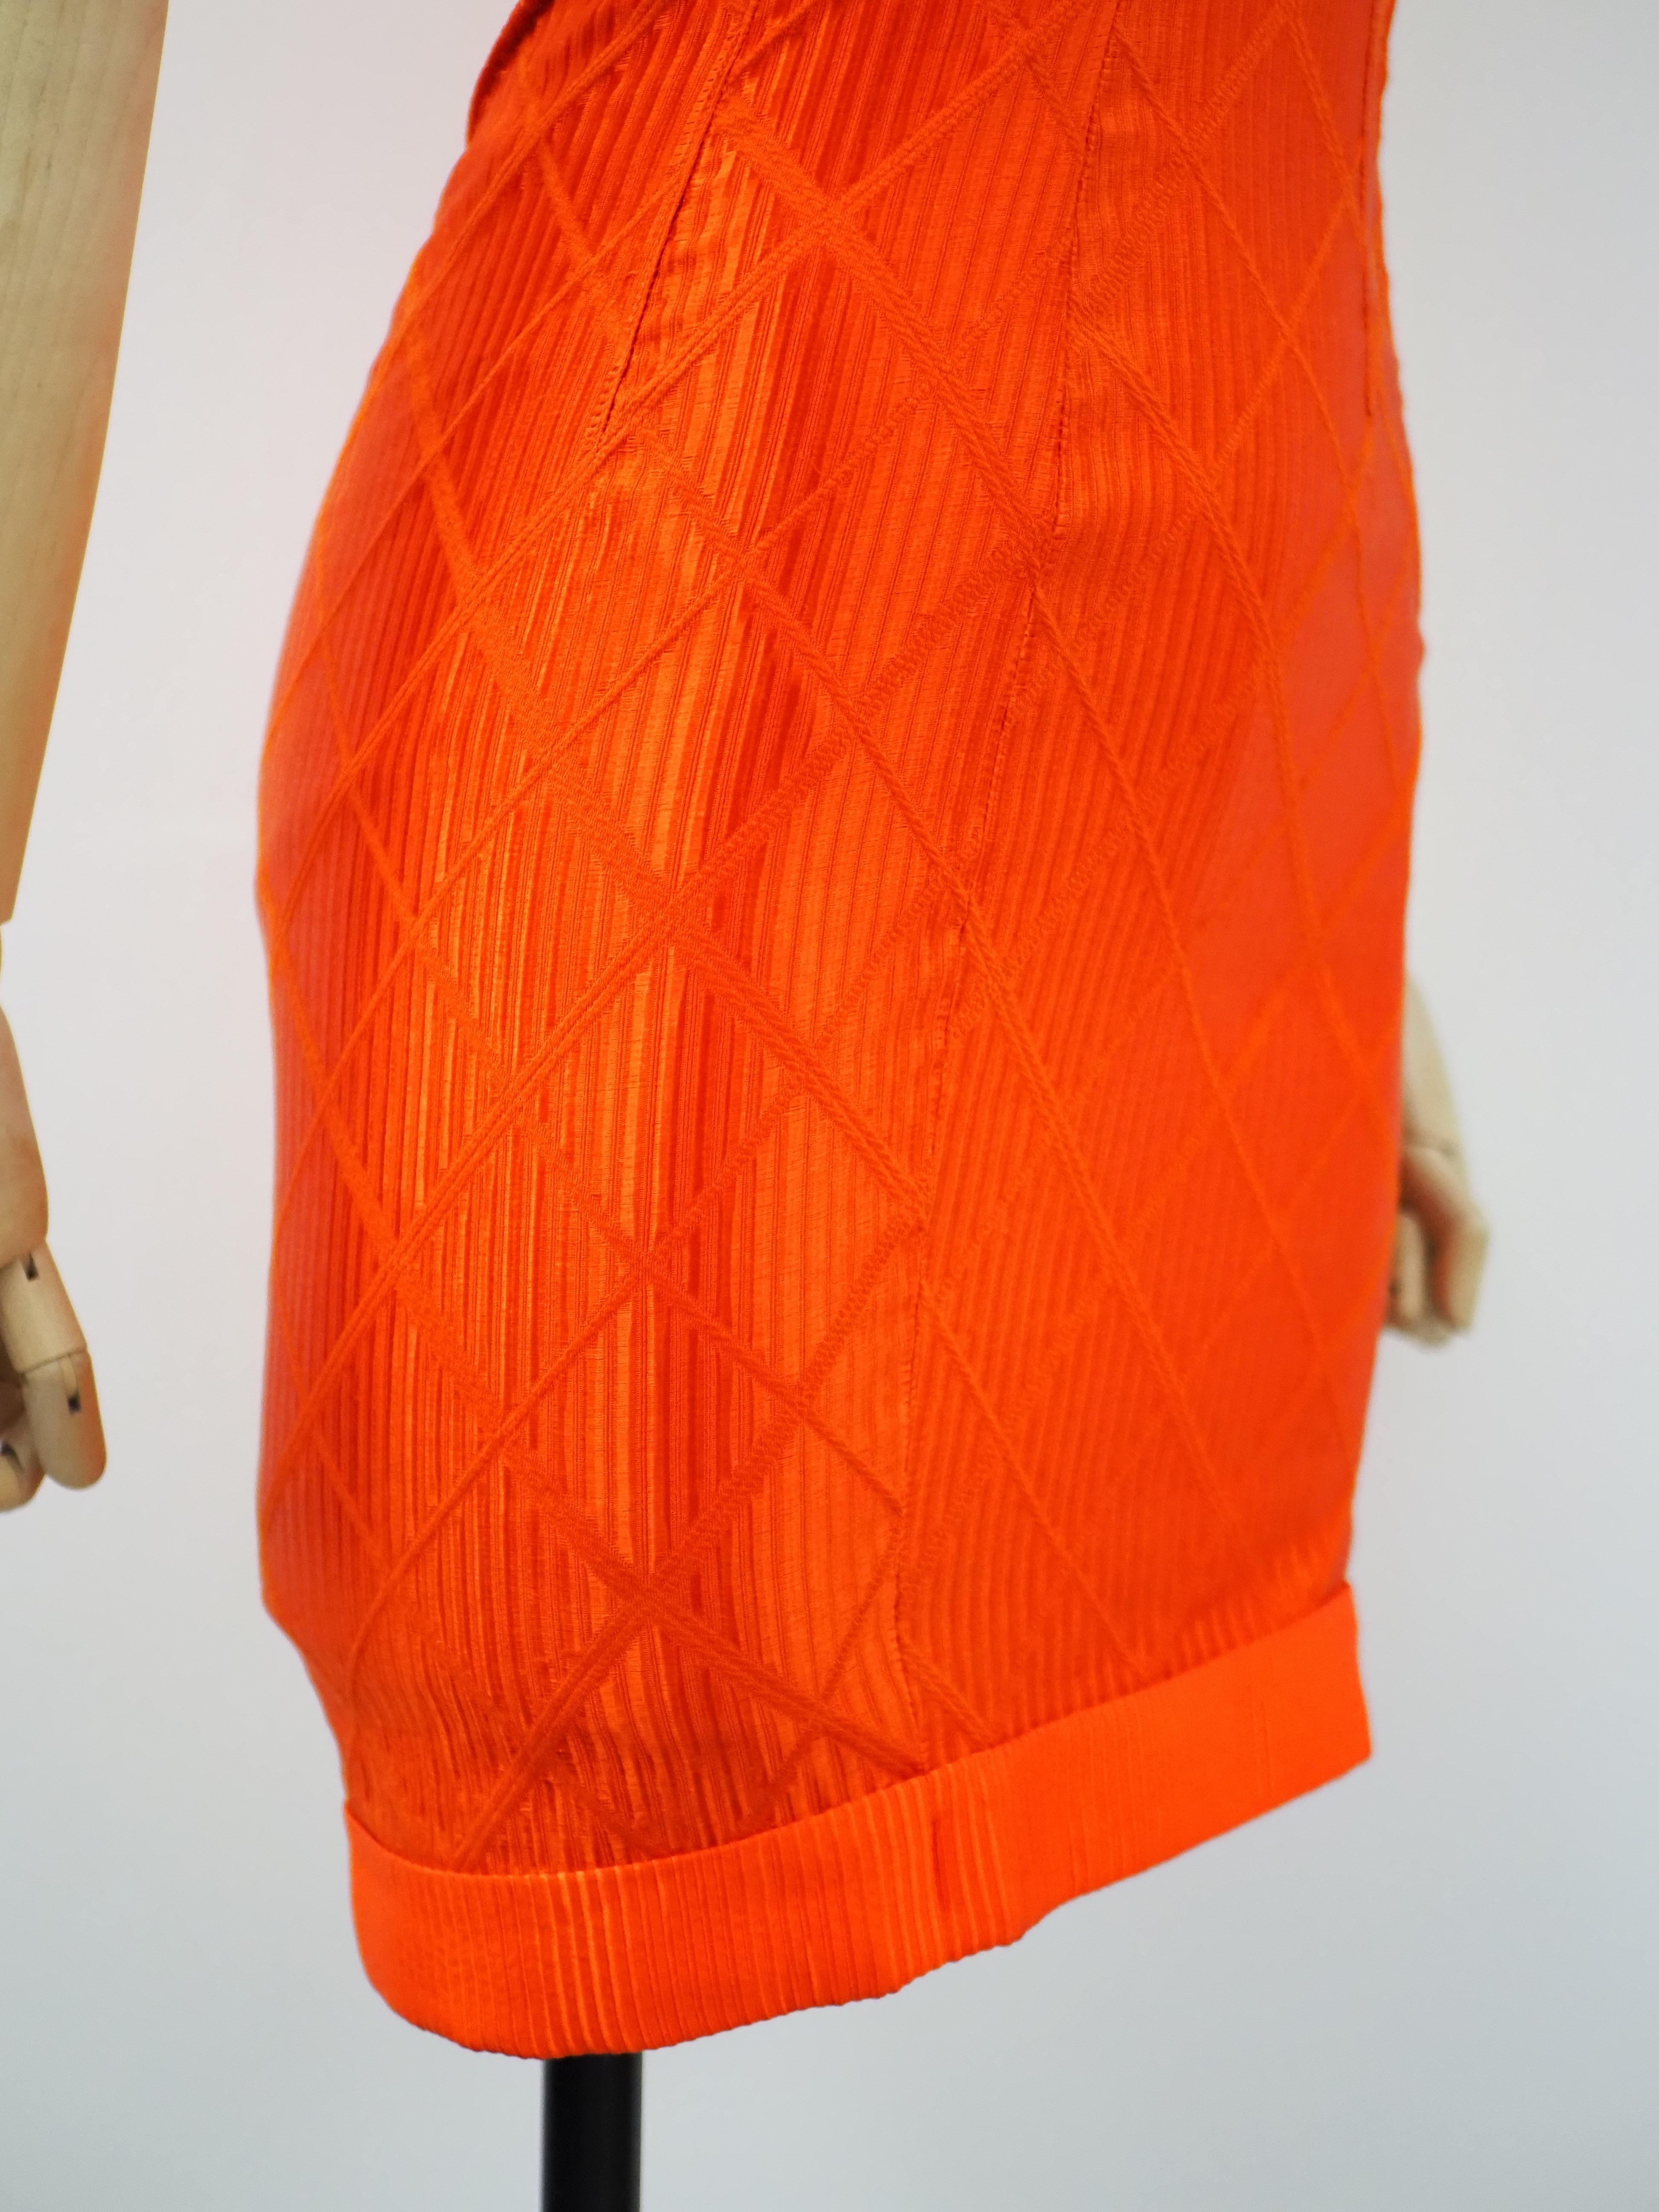 Versus by Gianni Versace orange dress 2